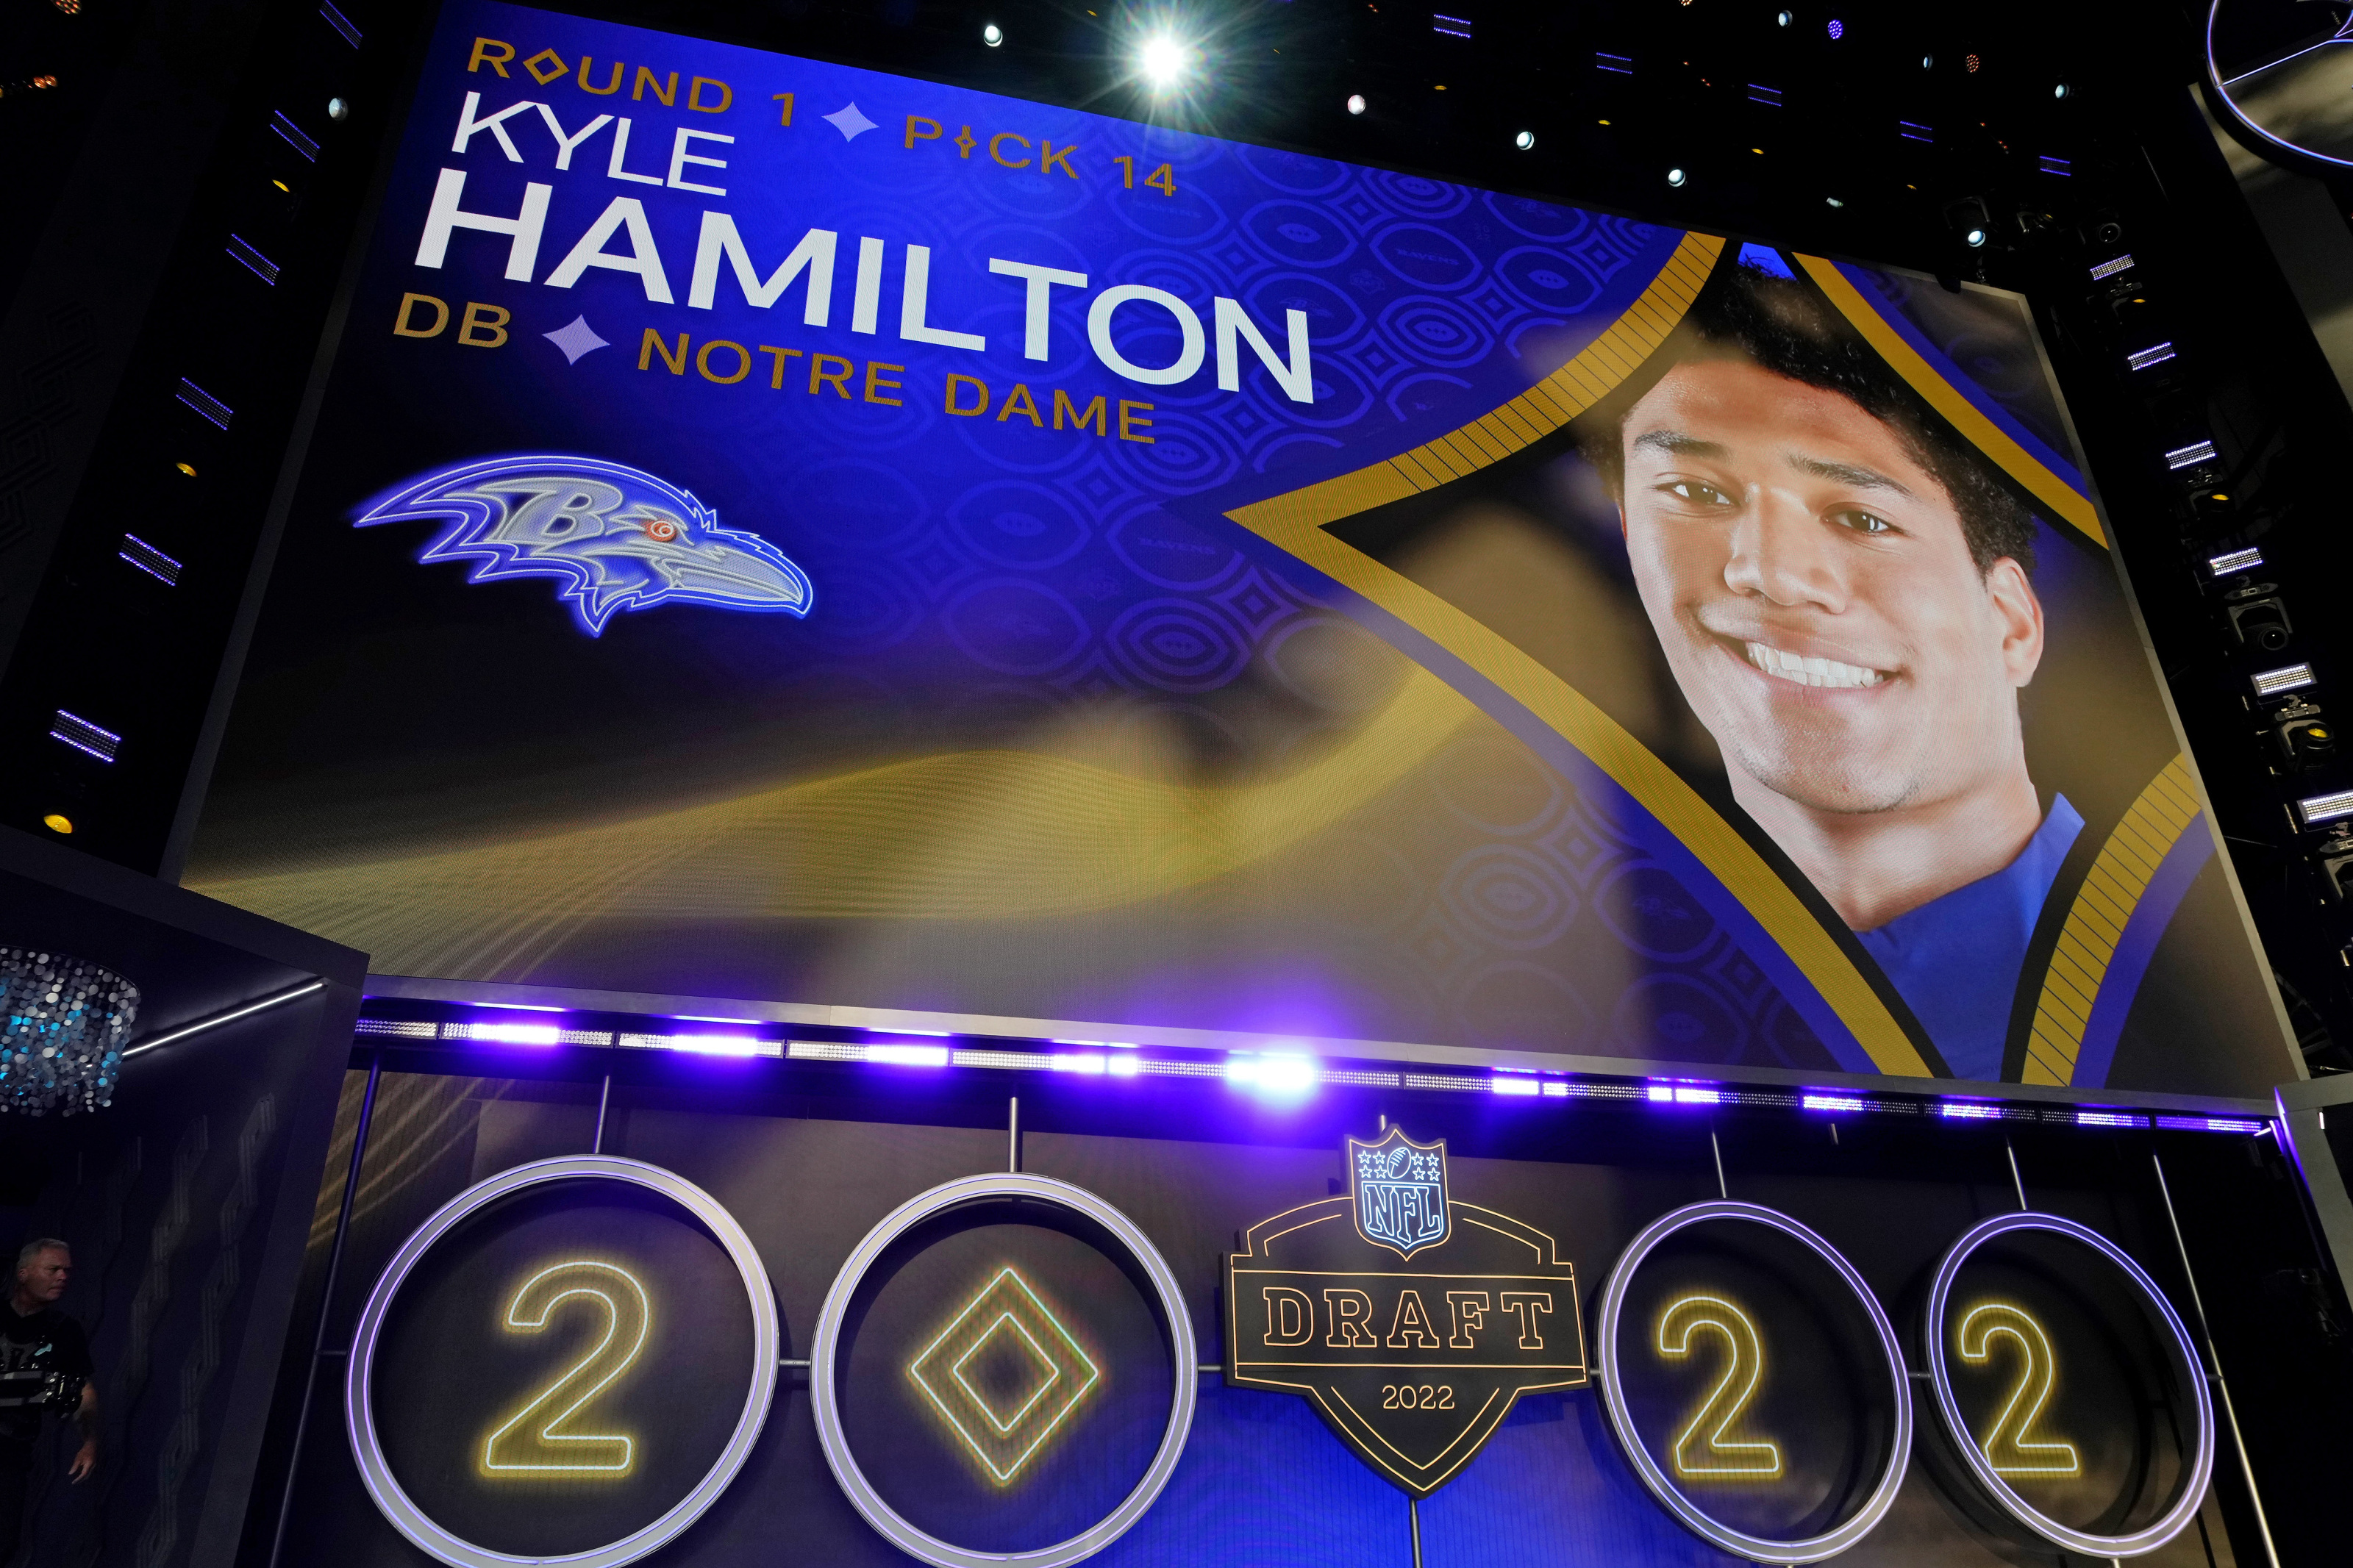 Notre Dame football: Kyle Hamilton slipping shows Draft